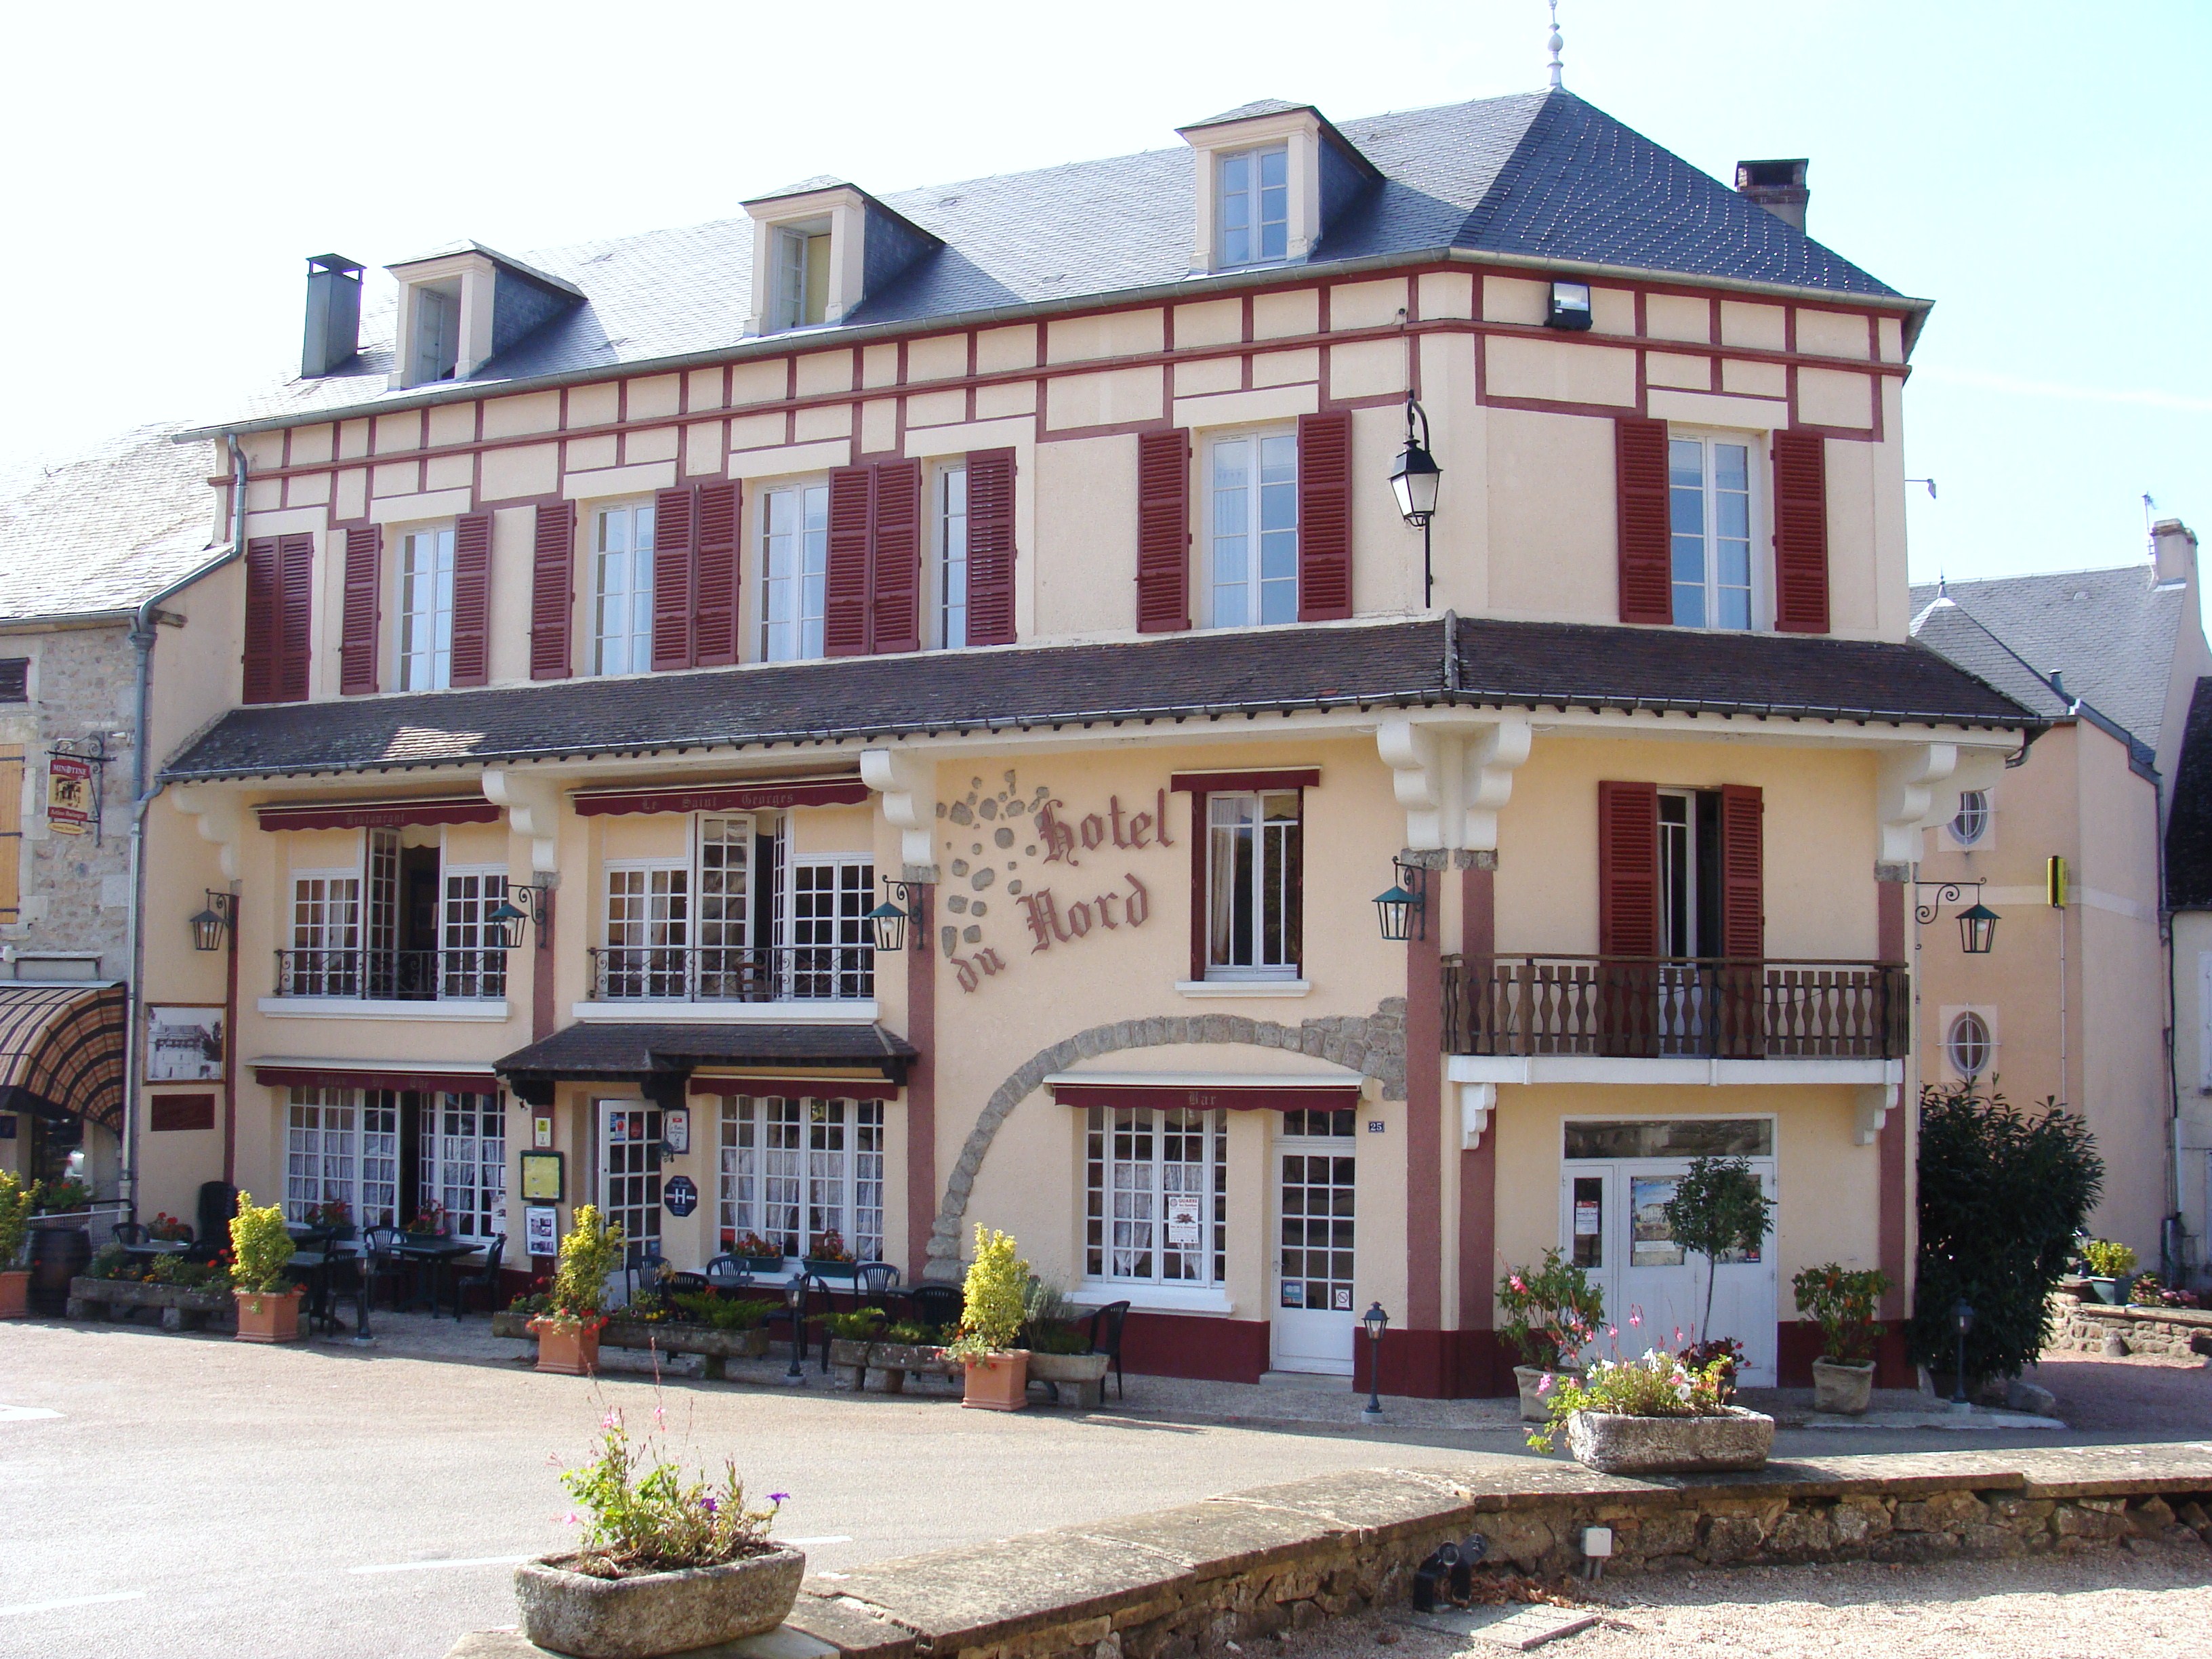 16445 L Hotel du Nord Restaurant le St Georges